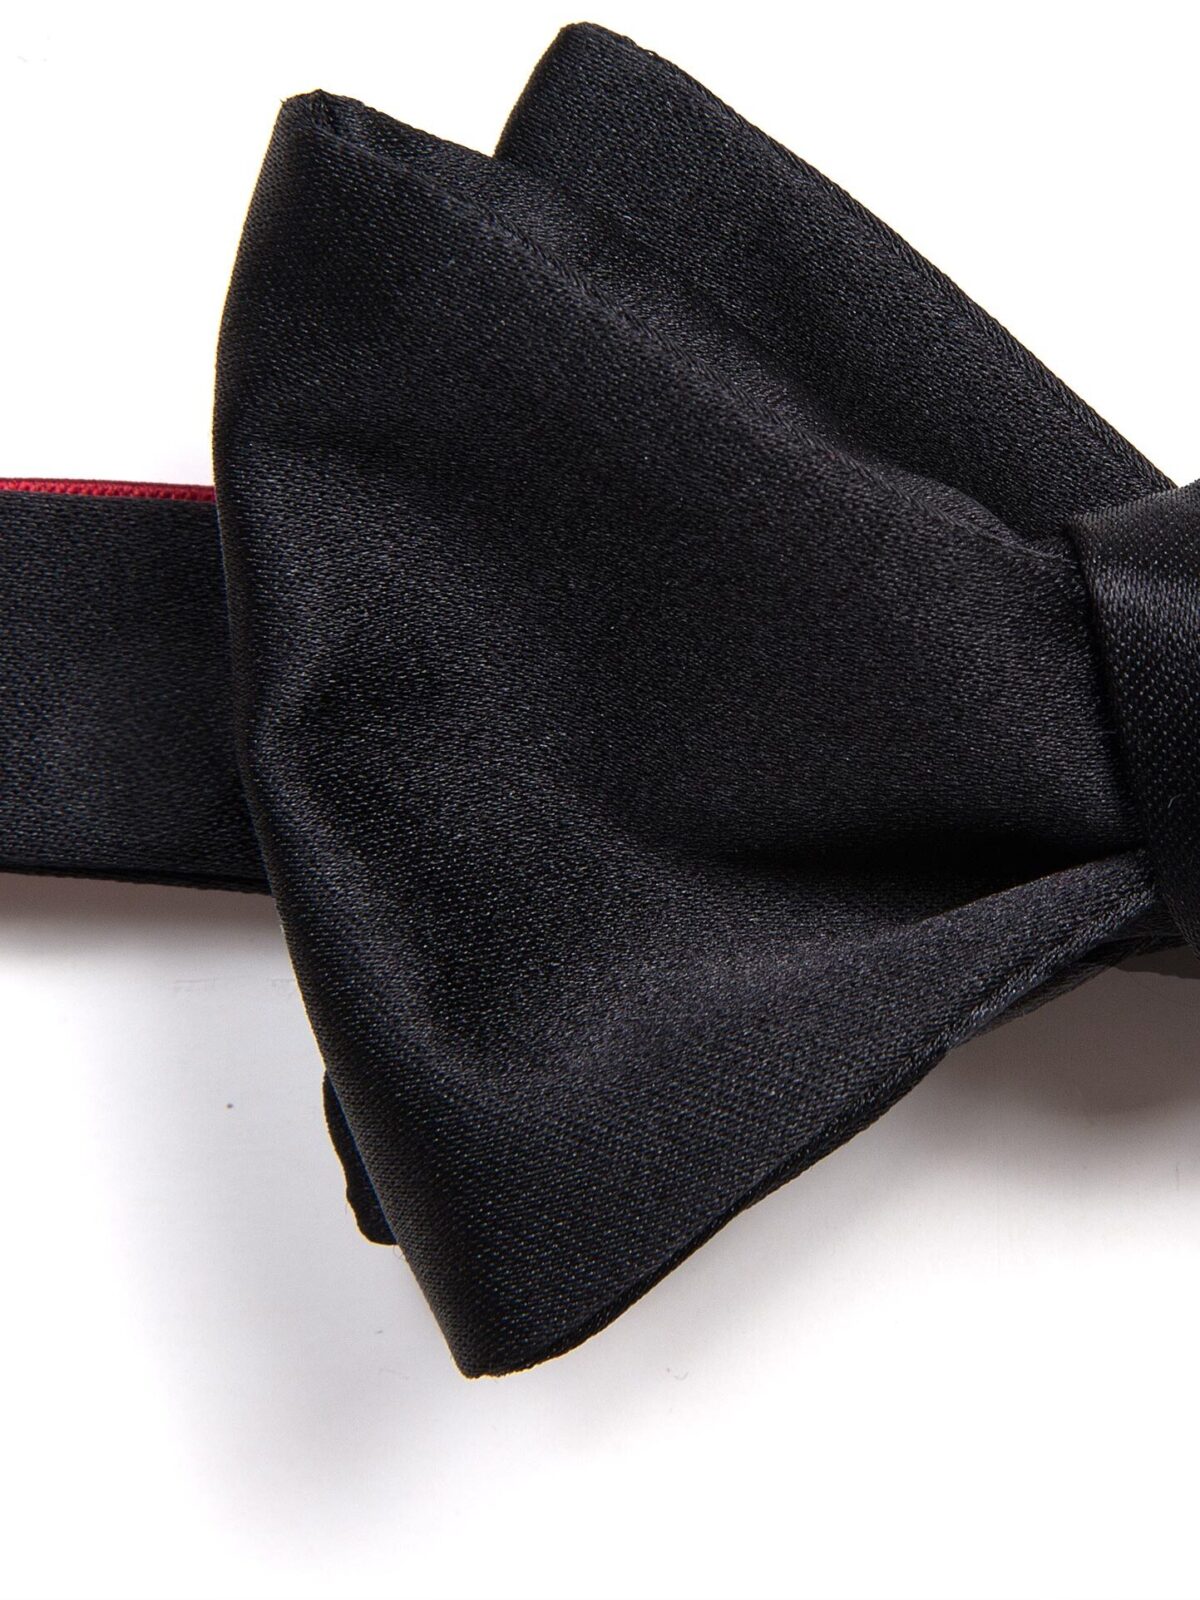 Black silk bowtie - ready tied - Eton